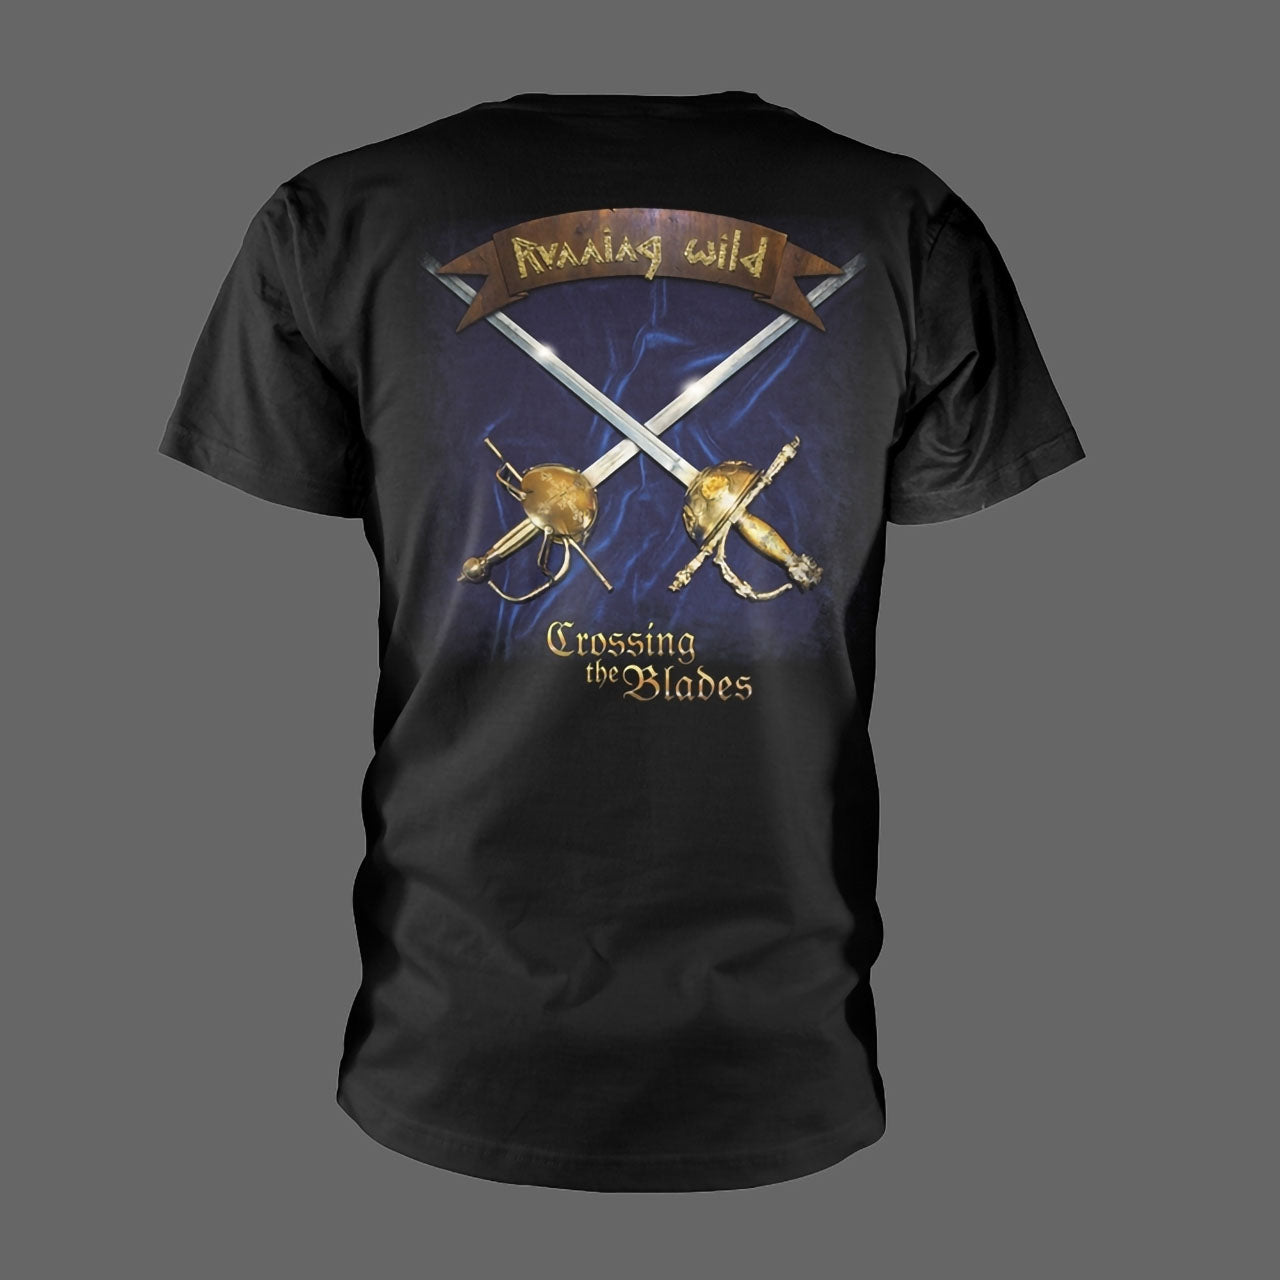 Running Wild - Crossing the Blades (T-Shirt)